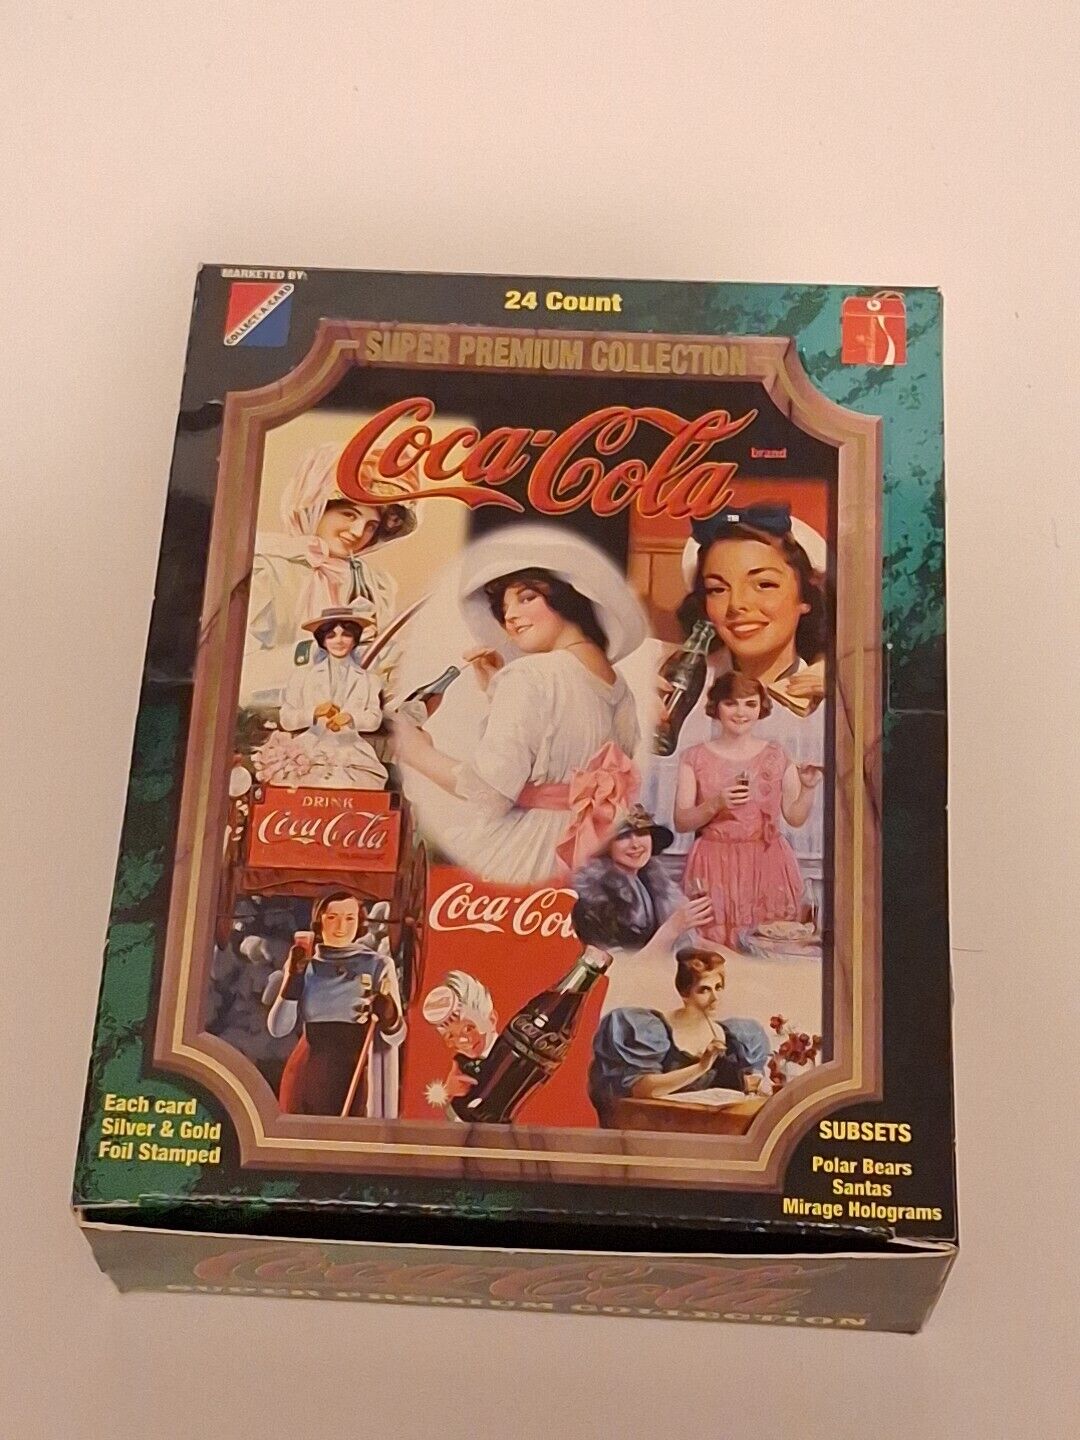 1995 Collect-A-Card Coca-Cola Super Premium Collection Cards OPEN BOX 226 CARDS 